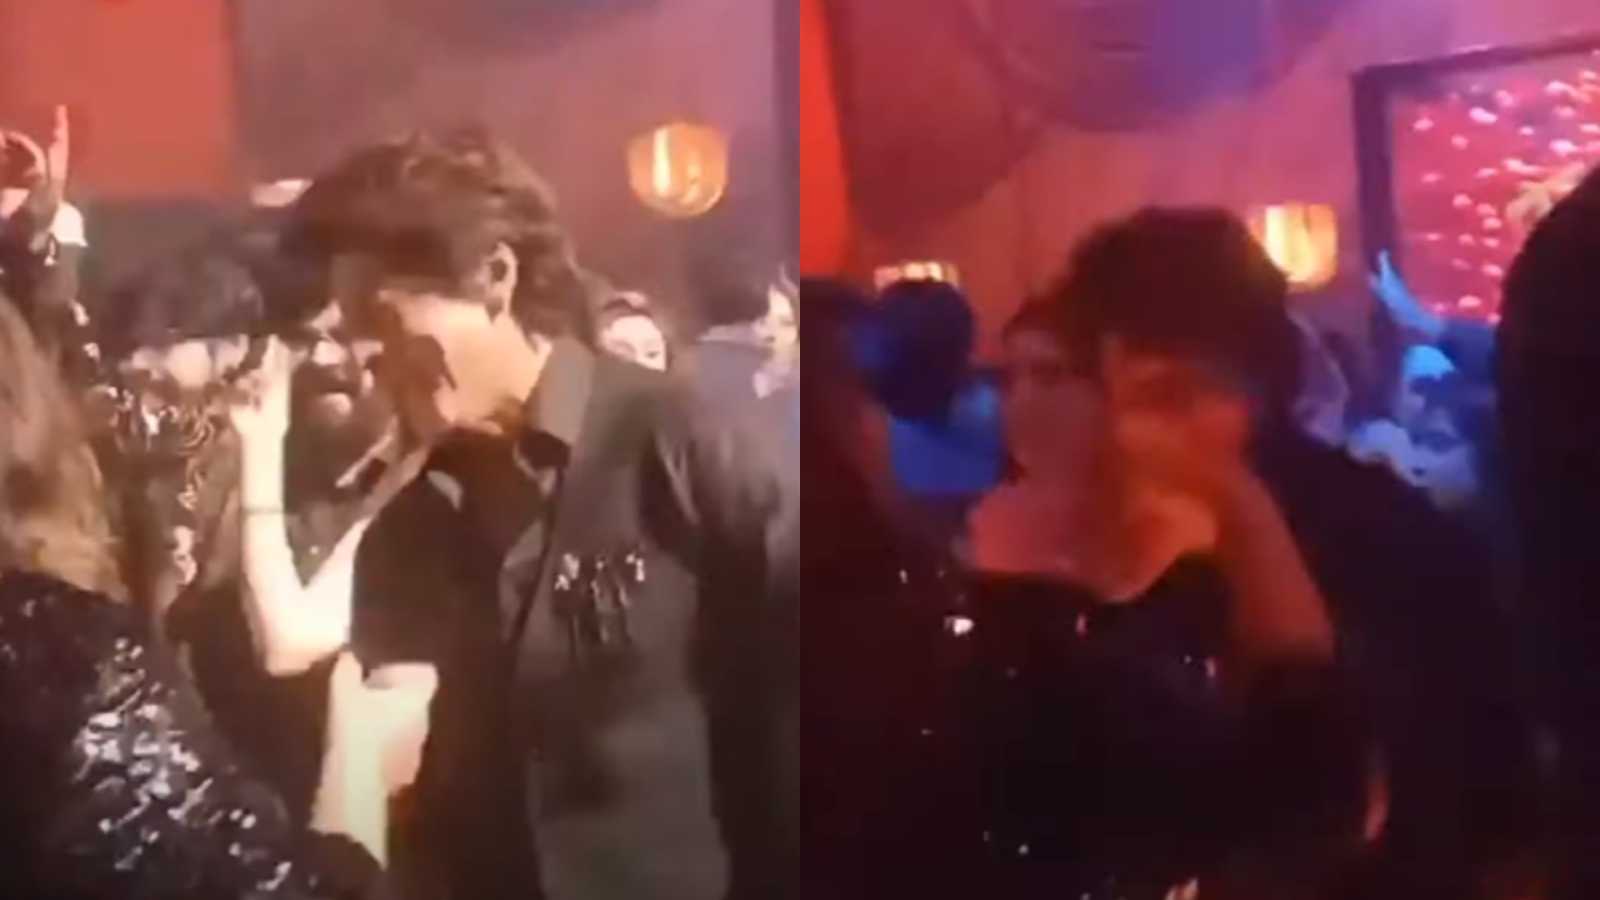 Shah Rukh Khan grooves to Kuch Kuch Hota Hai track in unseen video from Karan Johar's 50th birthday bash